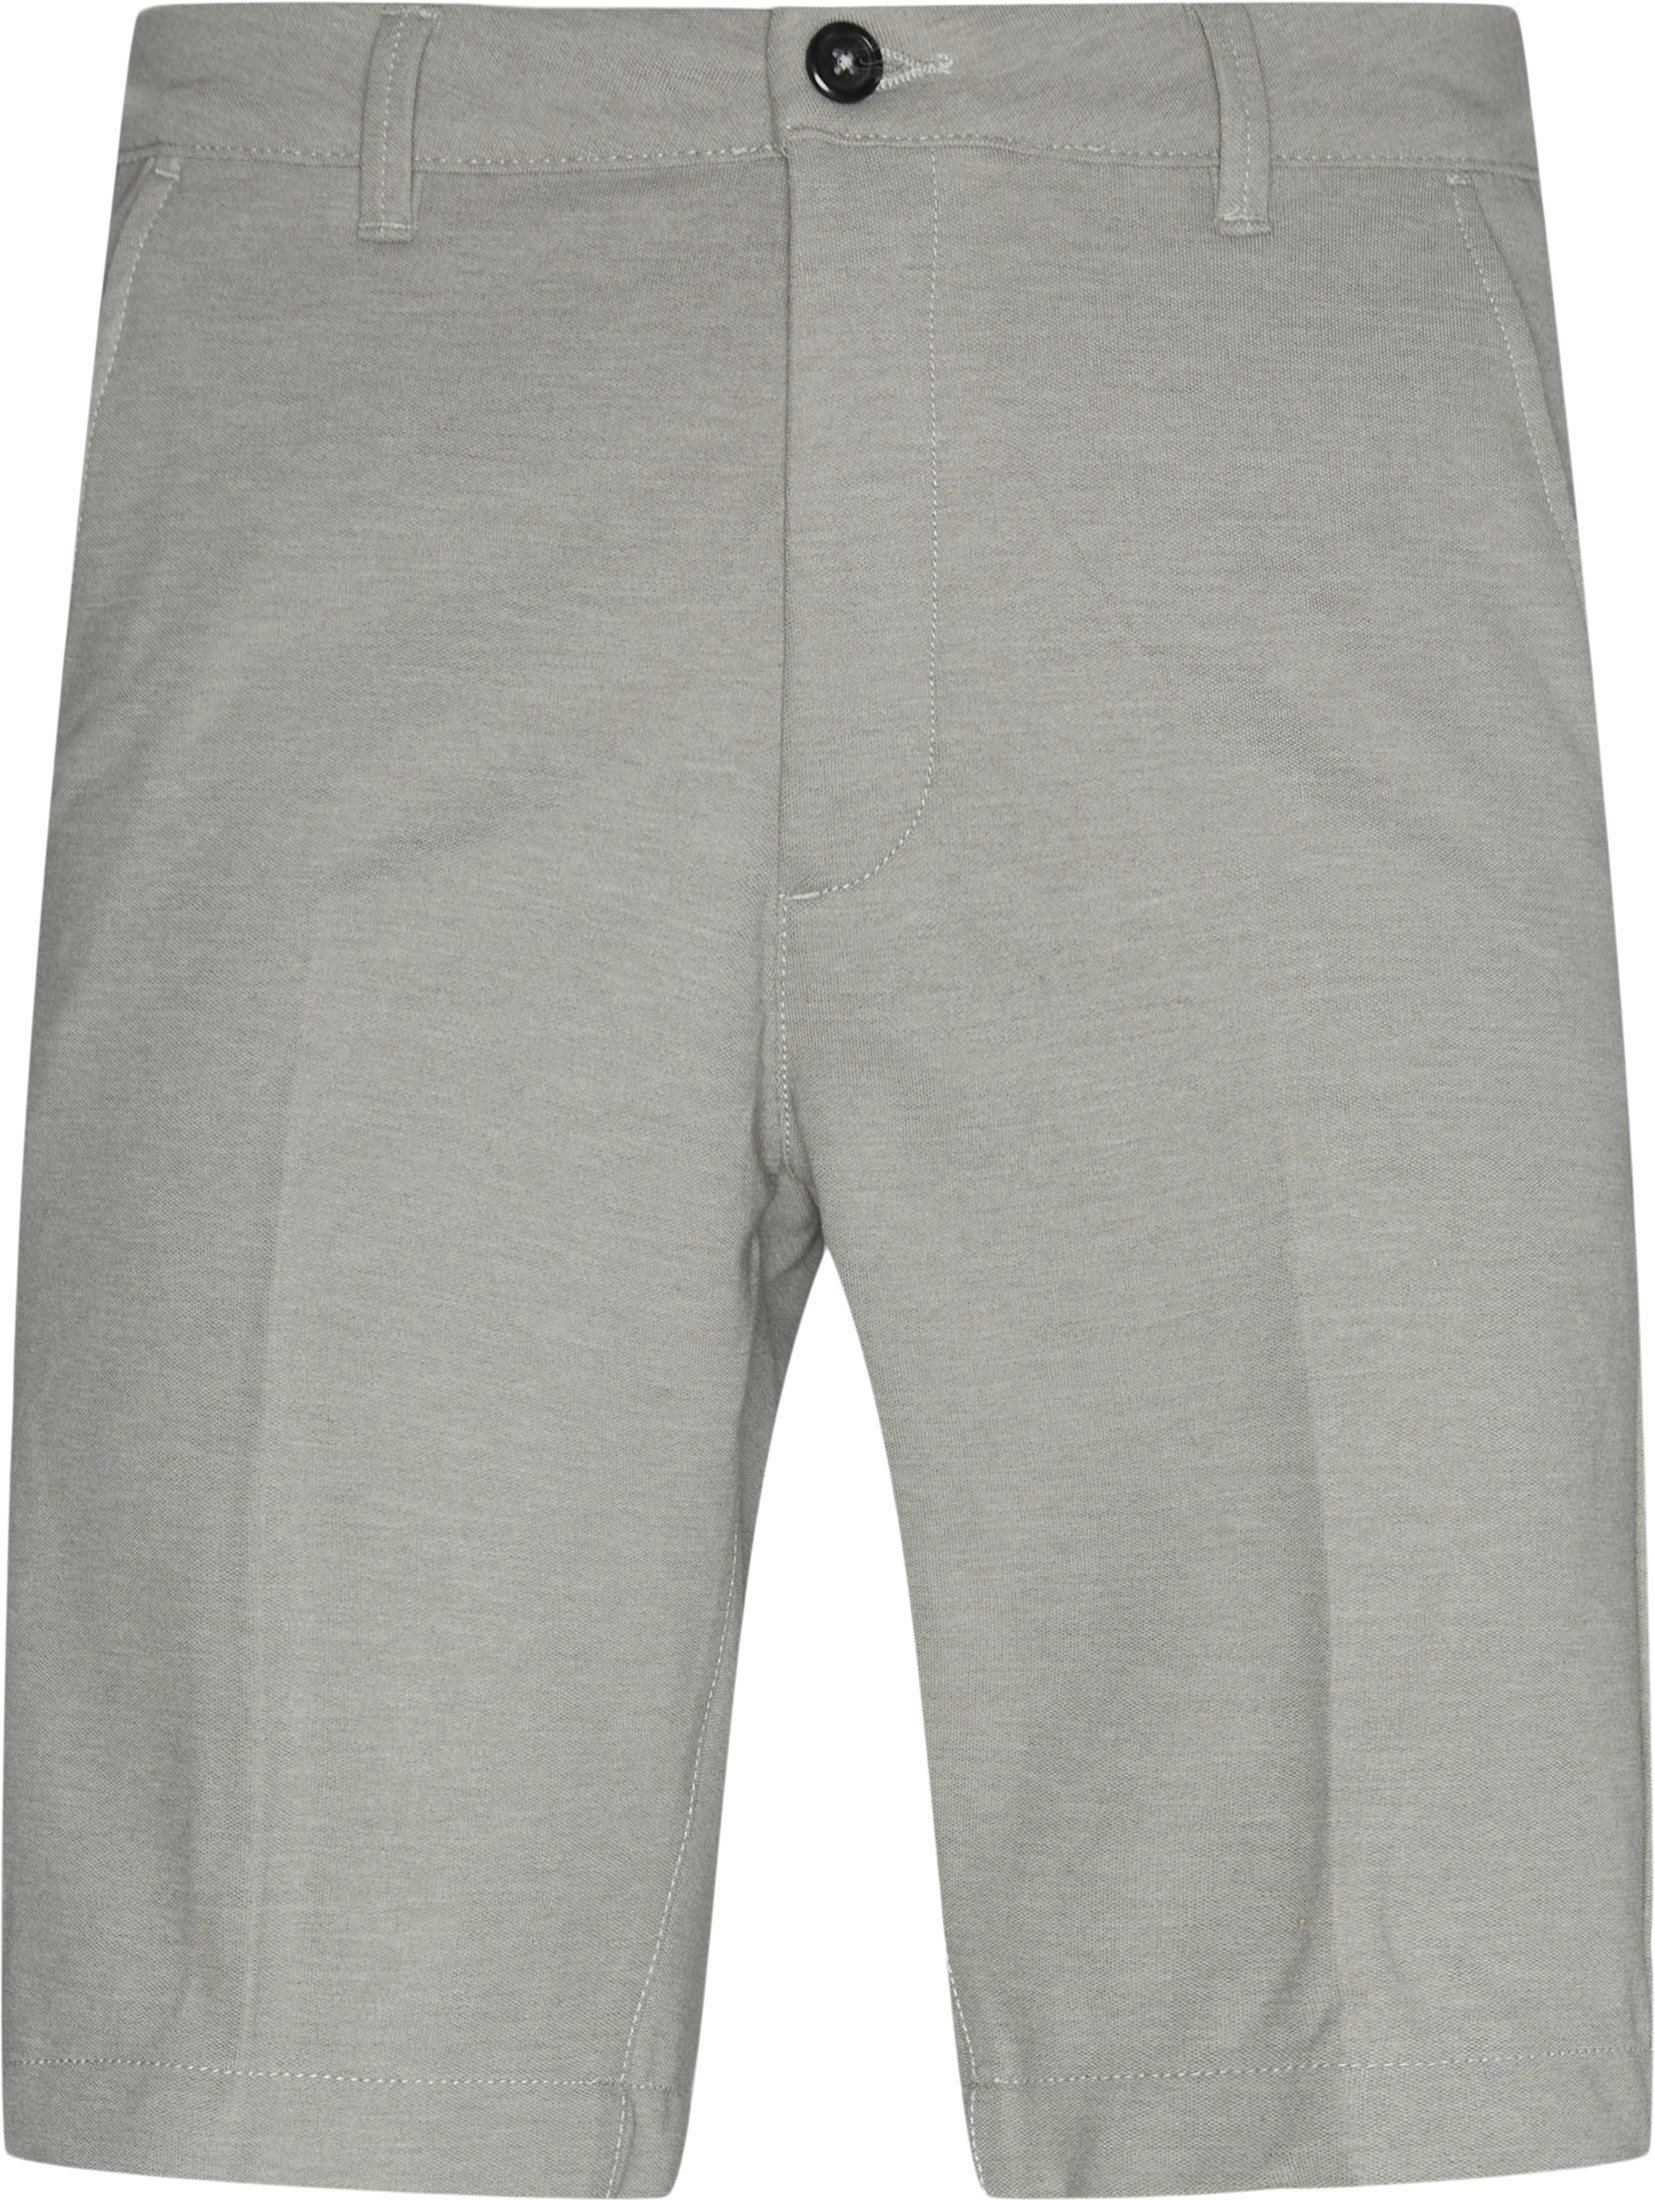 Florin Shorts - Shorts - Regular fit - Grey